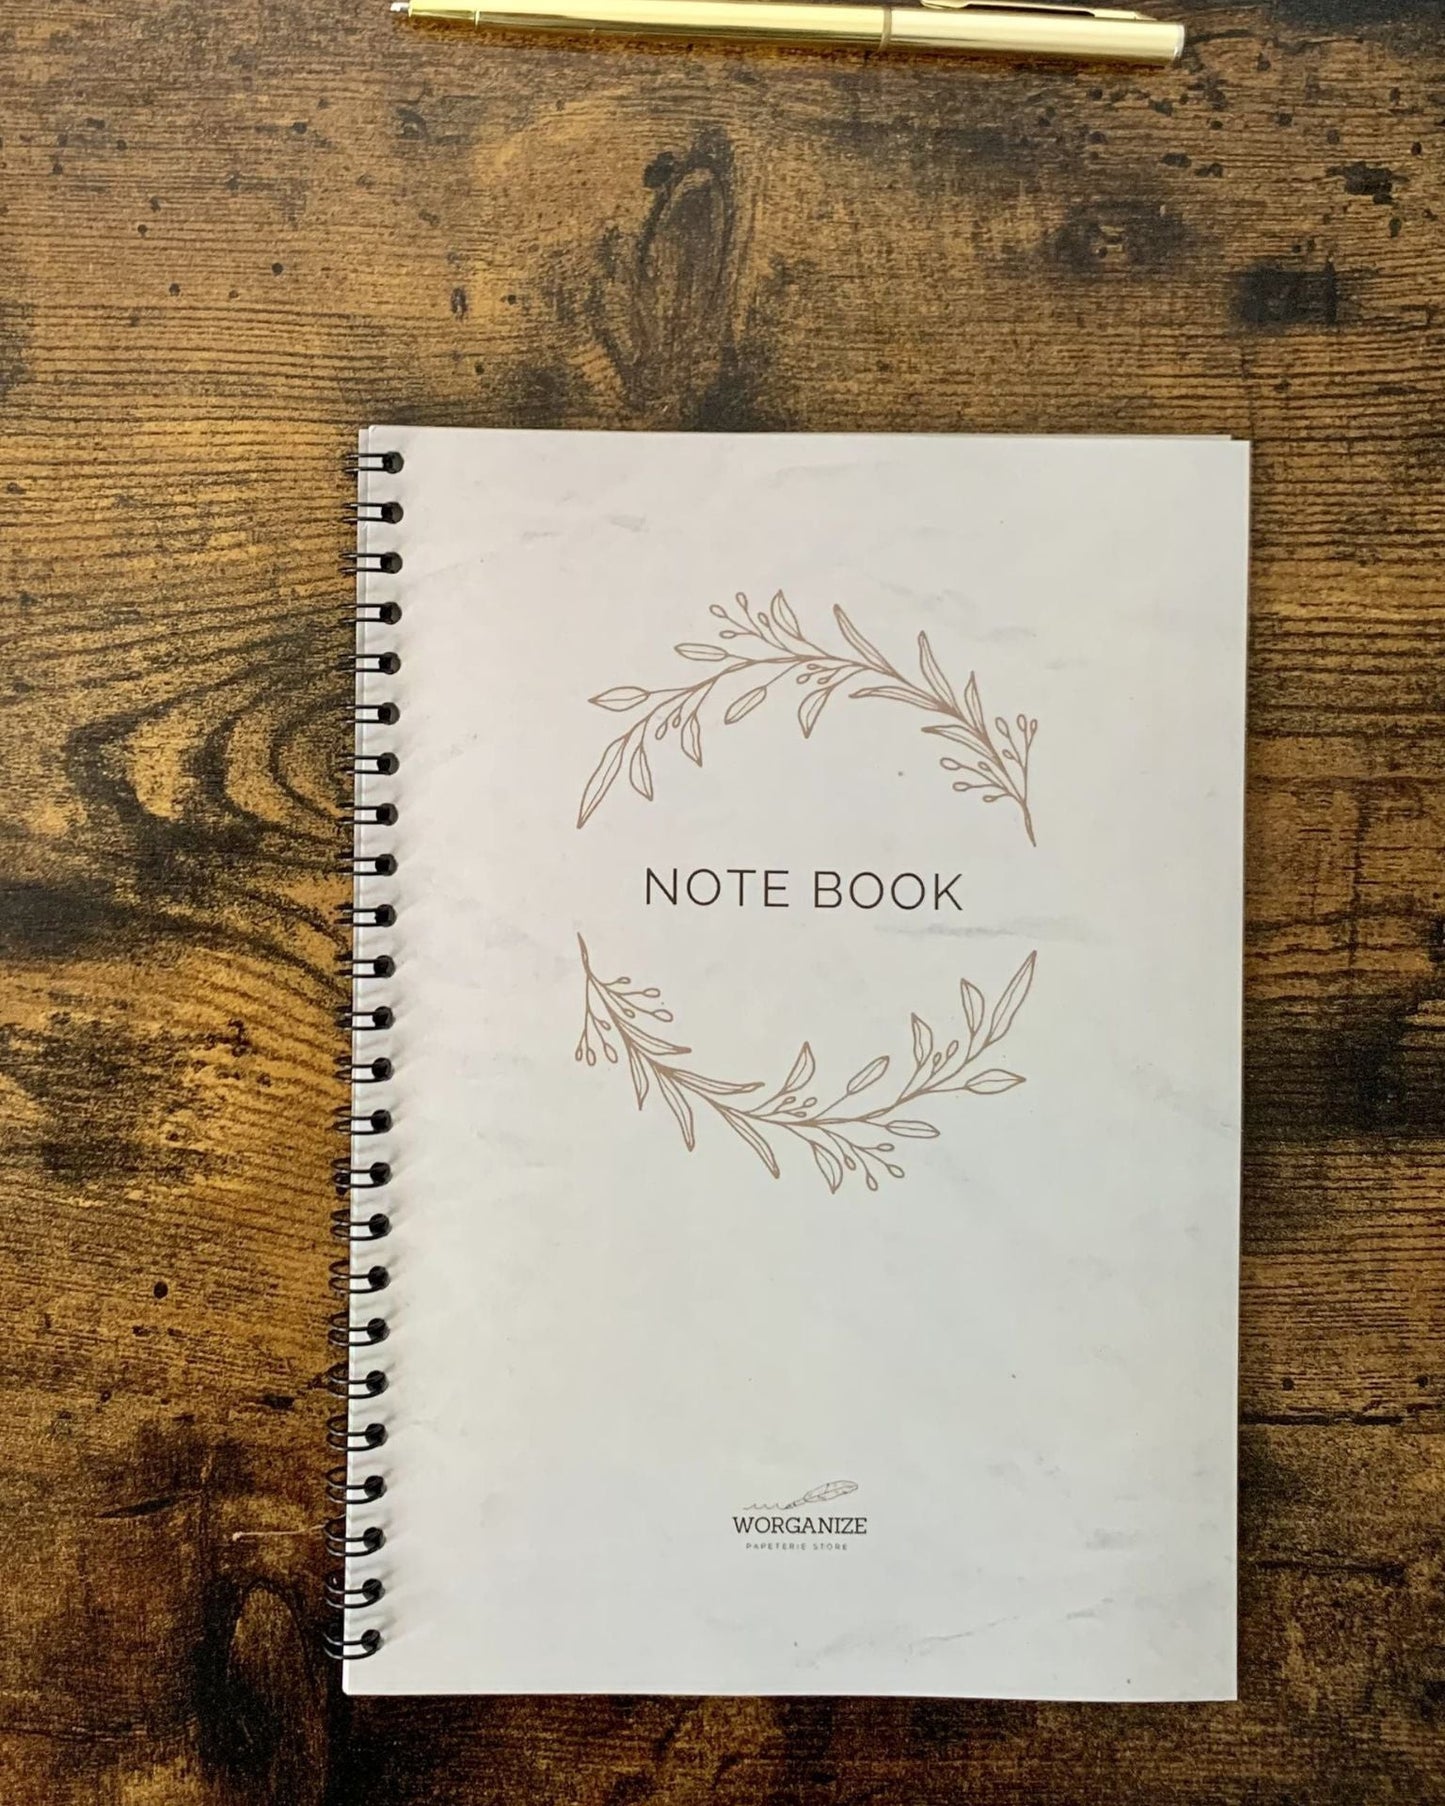 NoteBook de Worganize, la papeterie minimaliste d'organisation